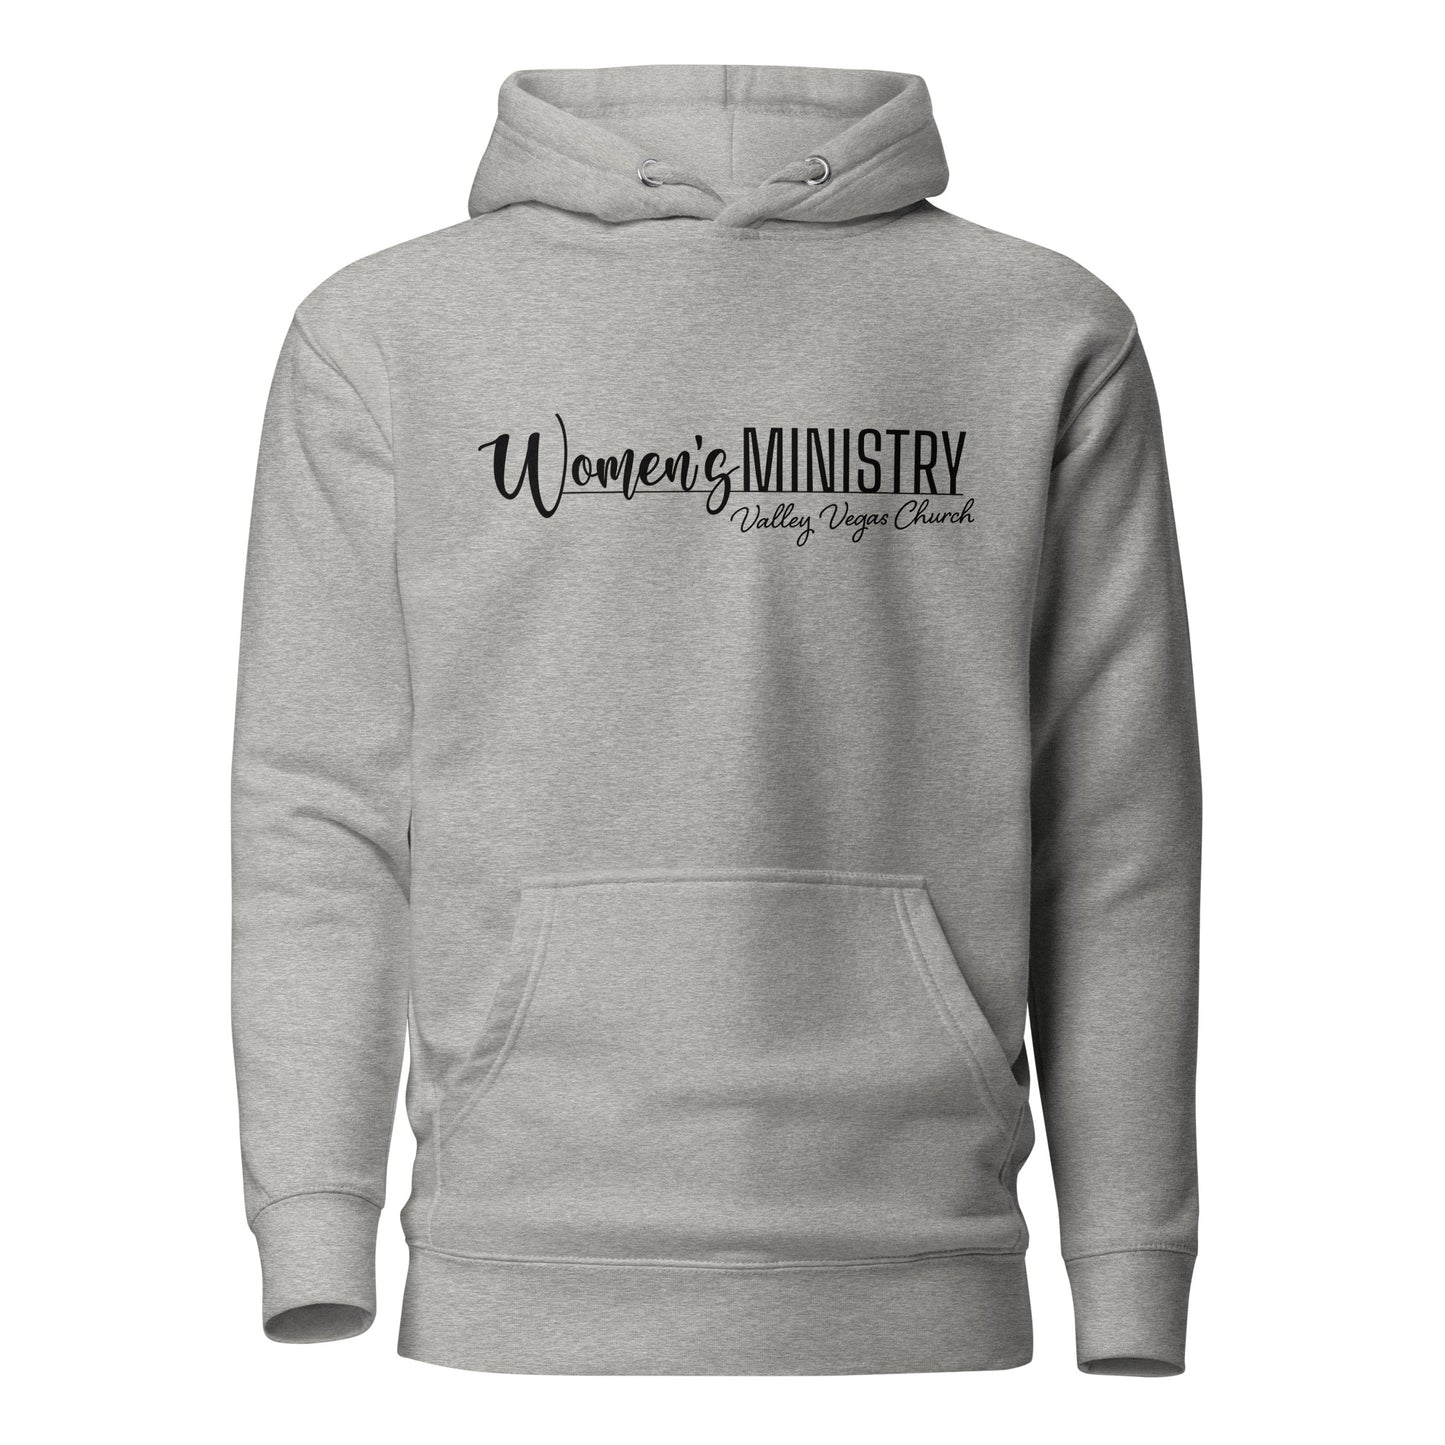 Women's Ministry - LIGHT | Hoodie